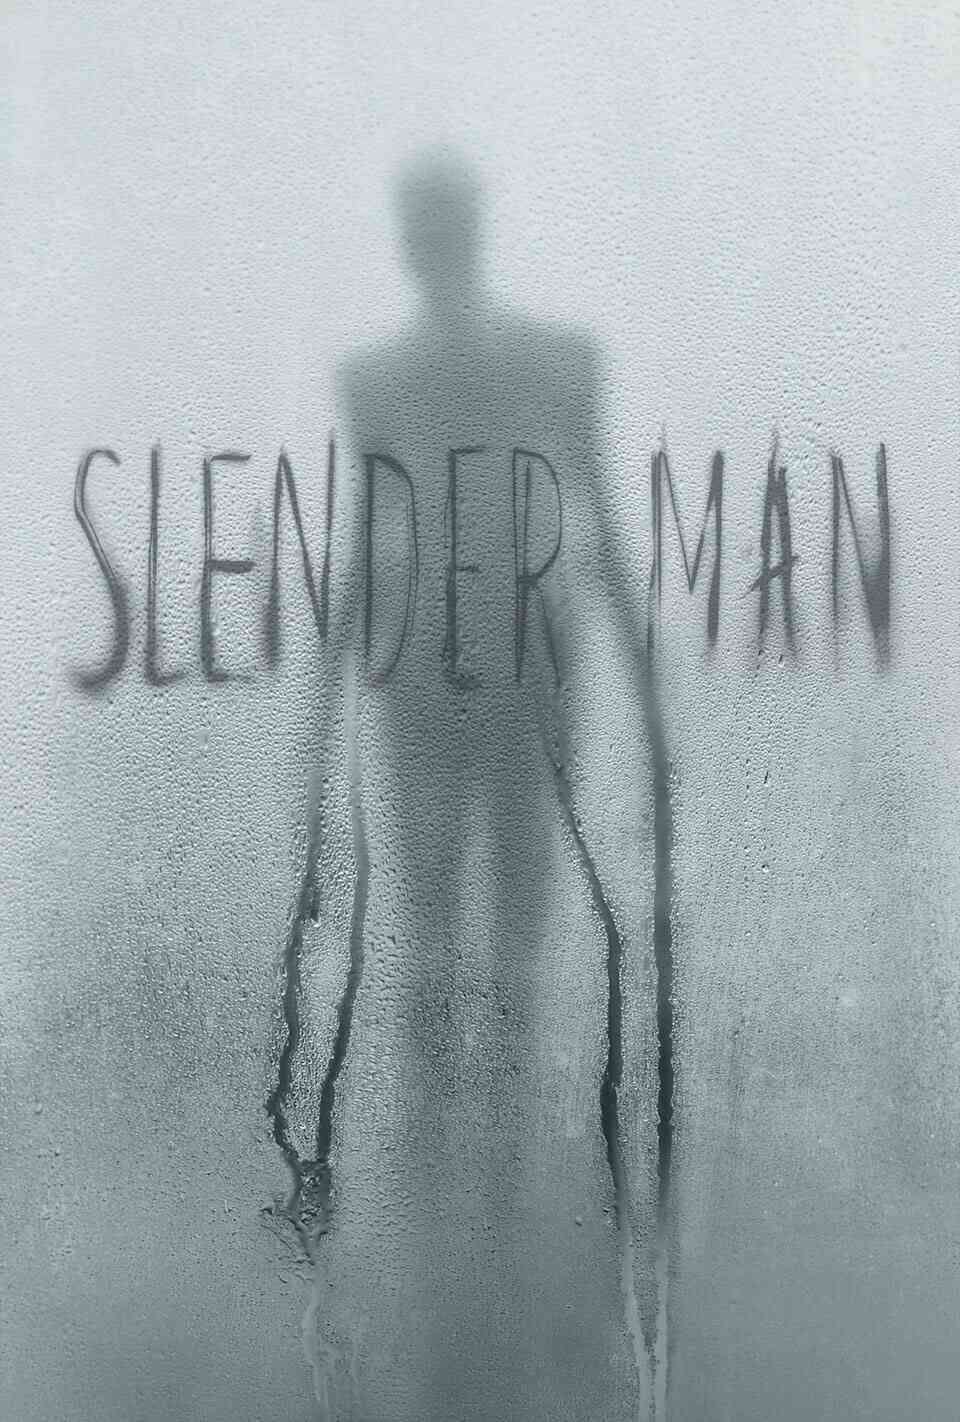 Read Slender Man screenplay.